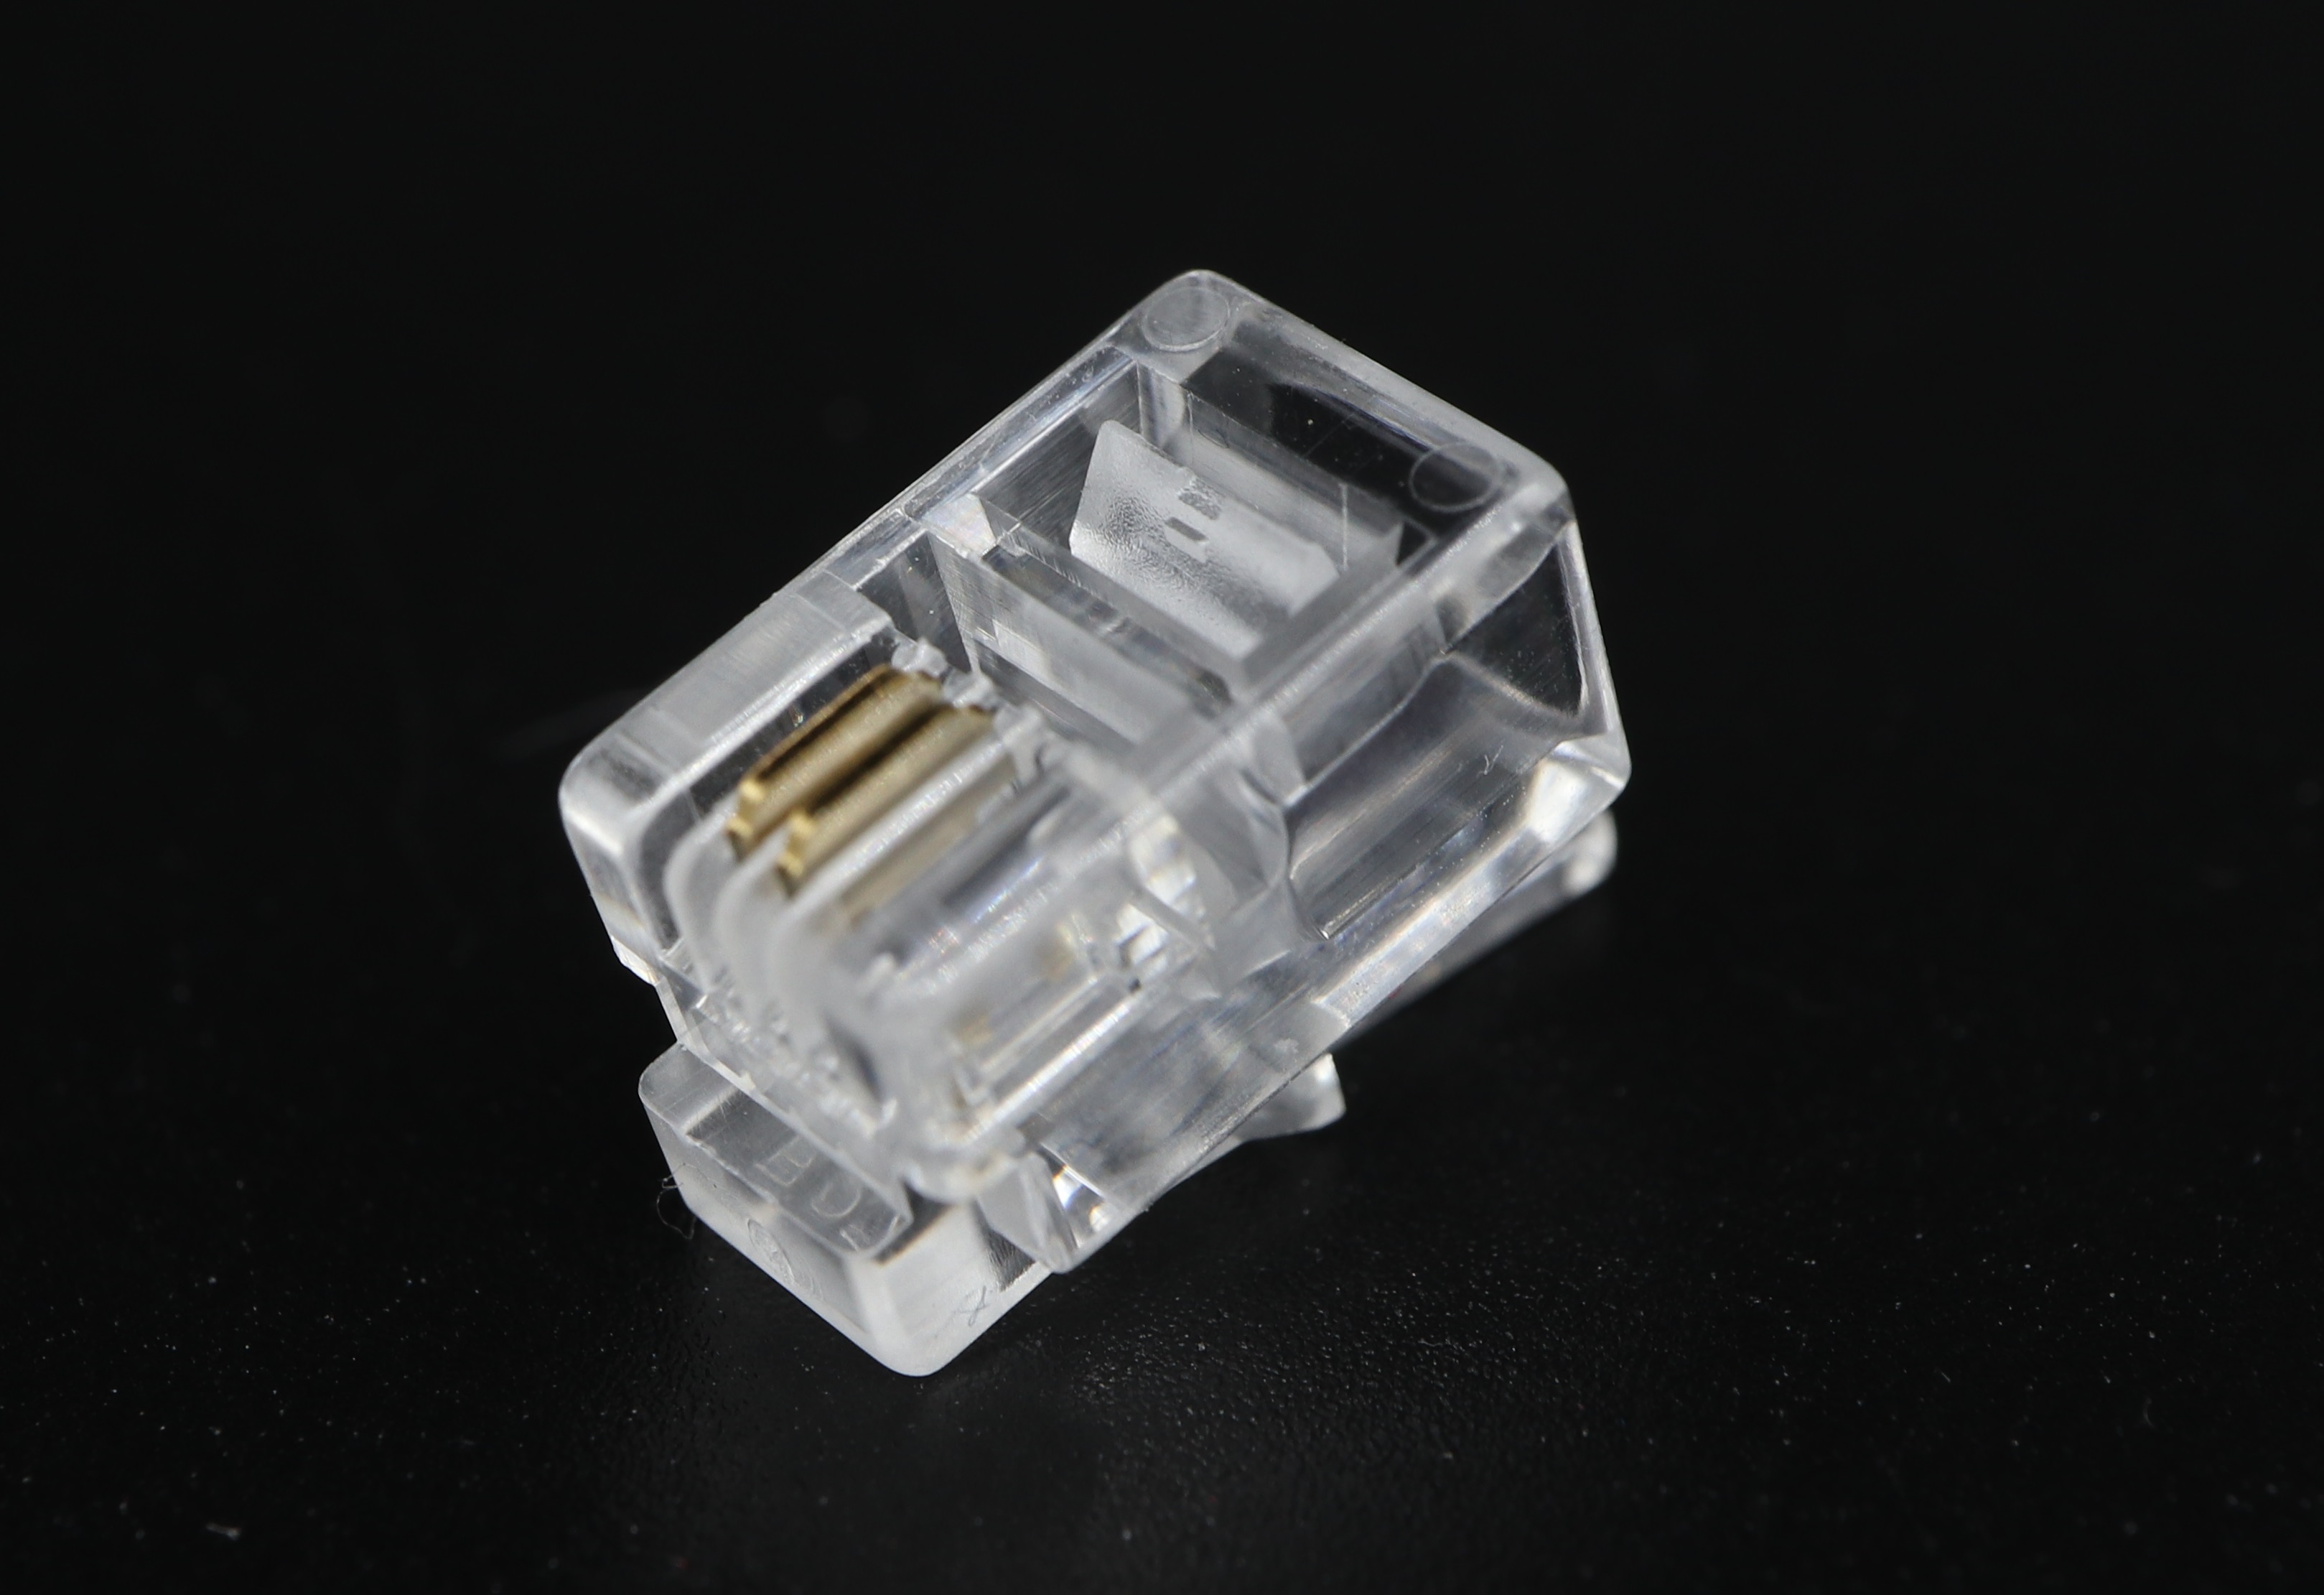 P4-004 - Modular plugs